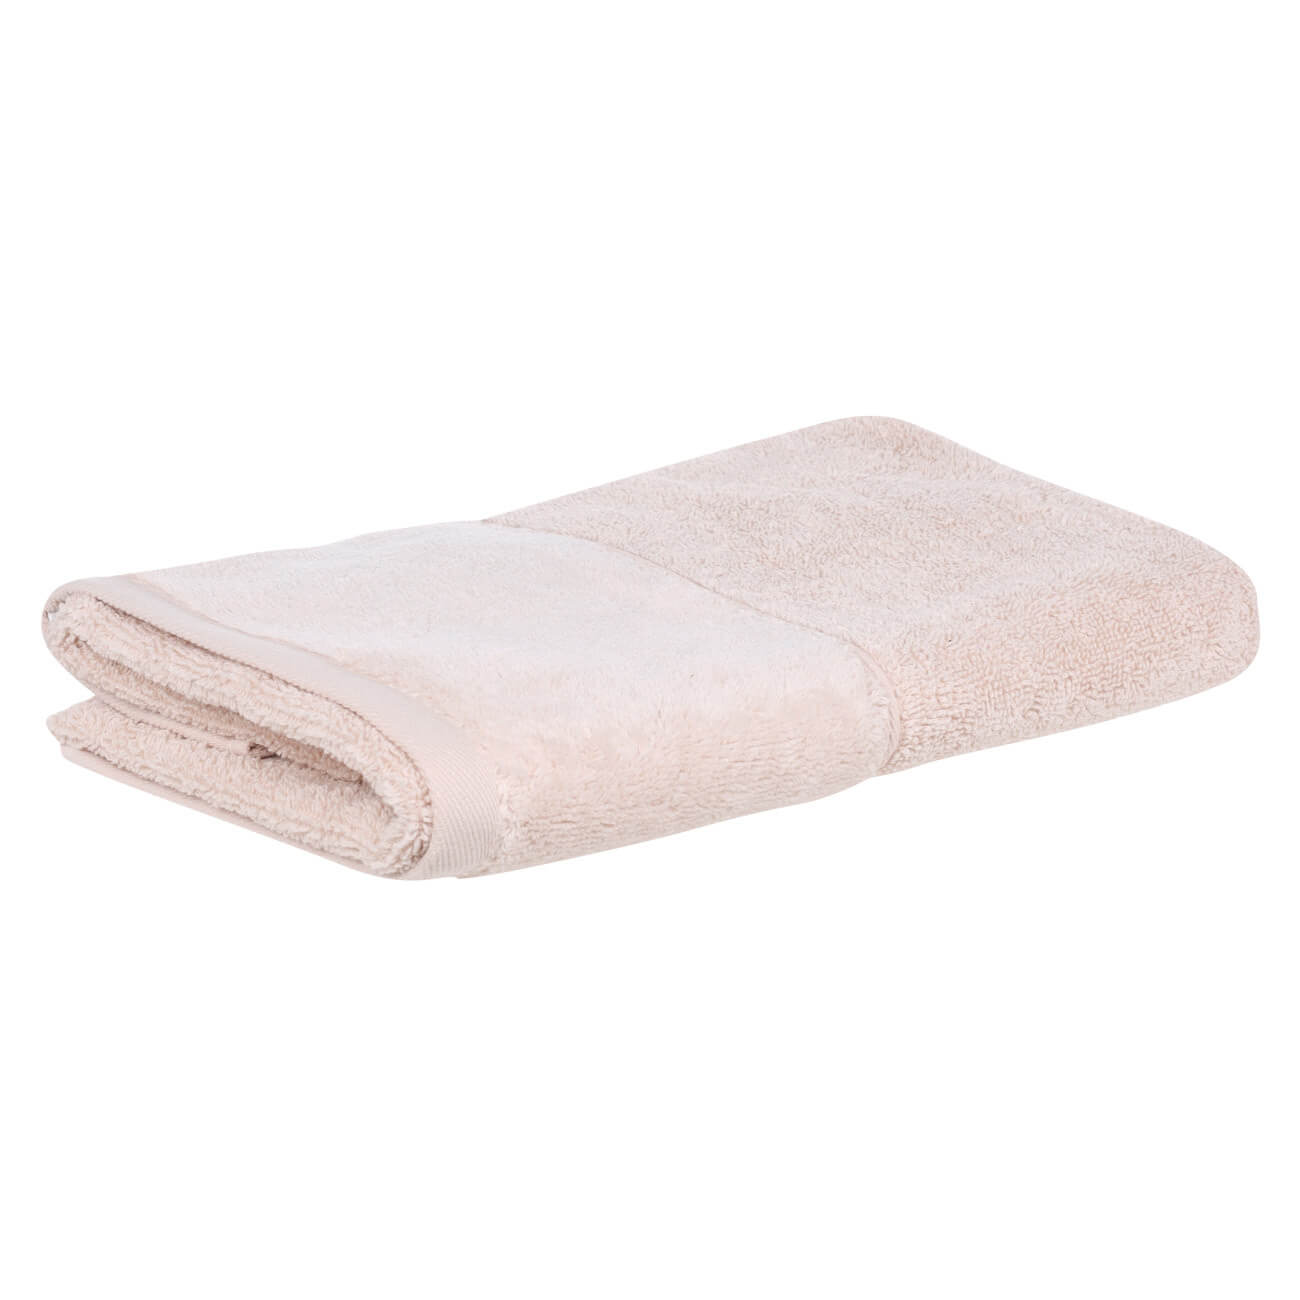 kuchenland полотенце 30х30 см 6 шт в корзине с бантом хлопок бежевое белое basket towel Полотенце, 50х90 см, хлопок, бежевое, Velvet touch